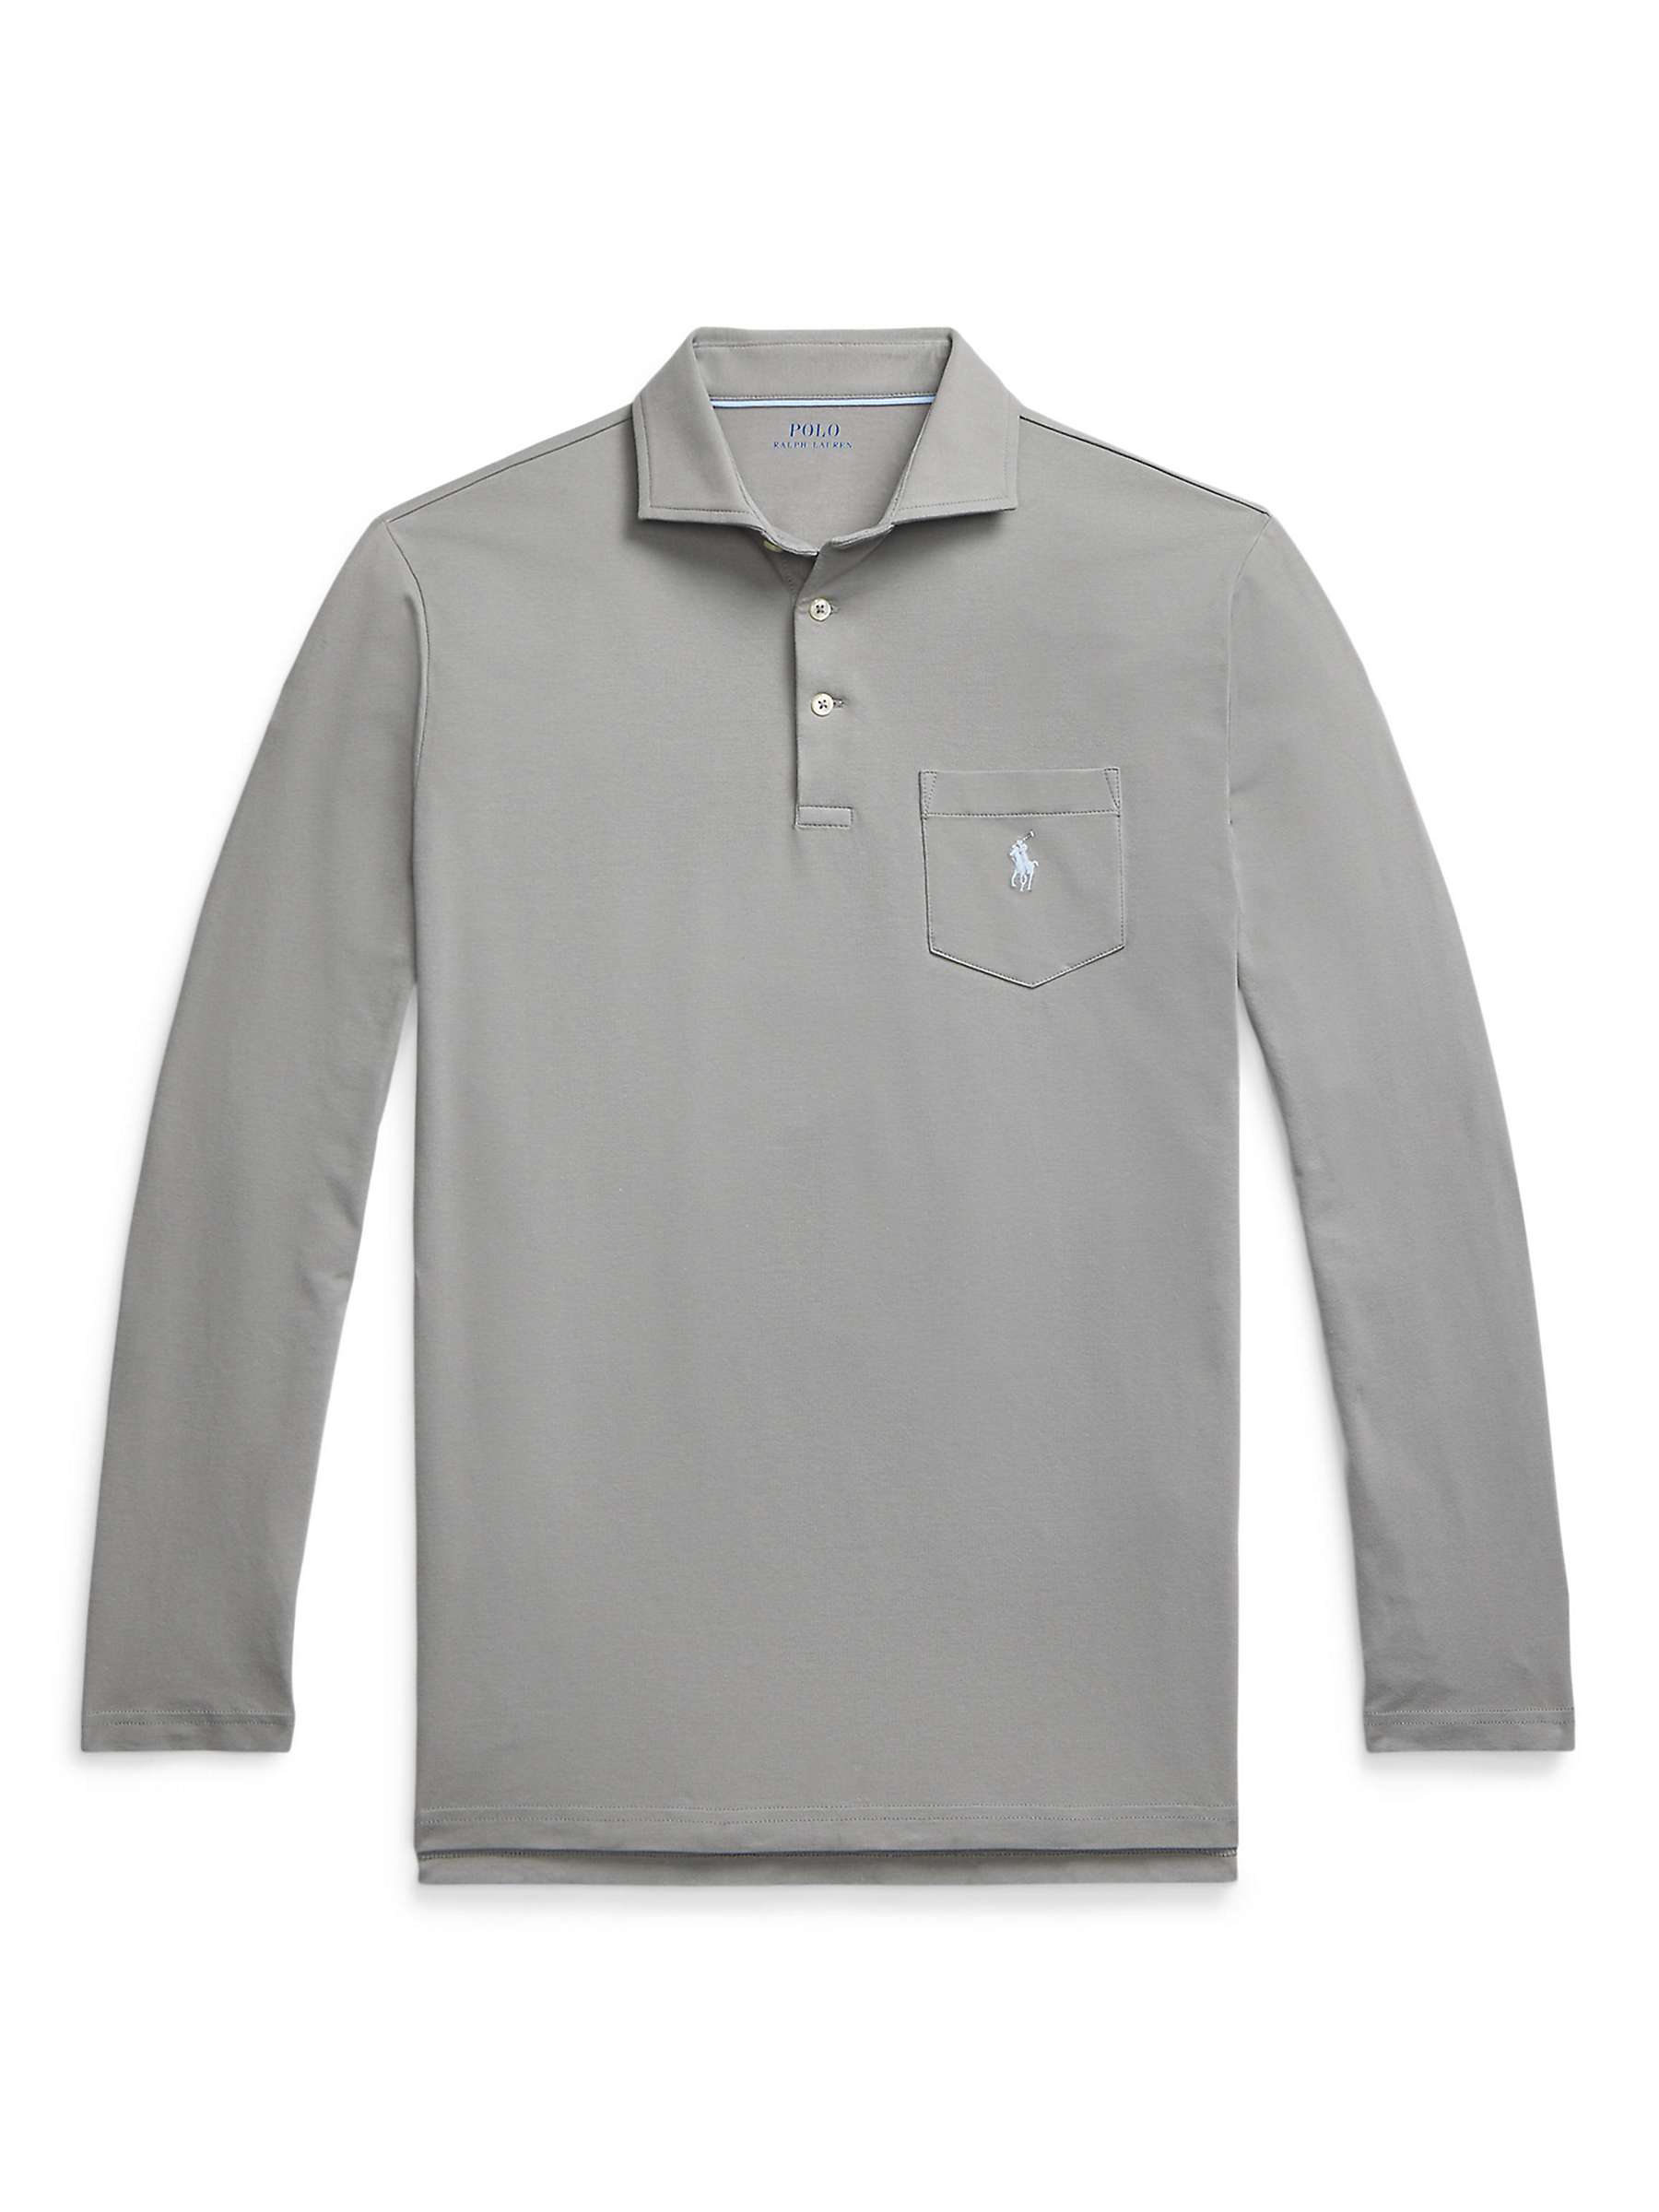 Buy Ralph Lauren Vintage Inspired Lisle Polo Shirt, Grey Online at johnlewis.com